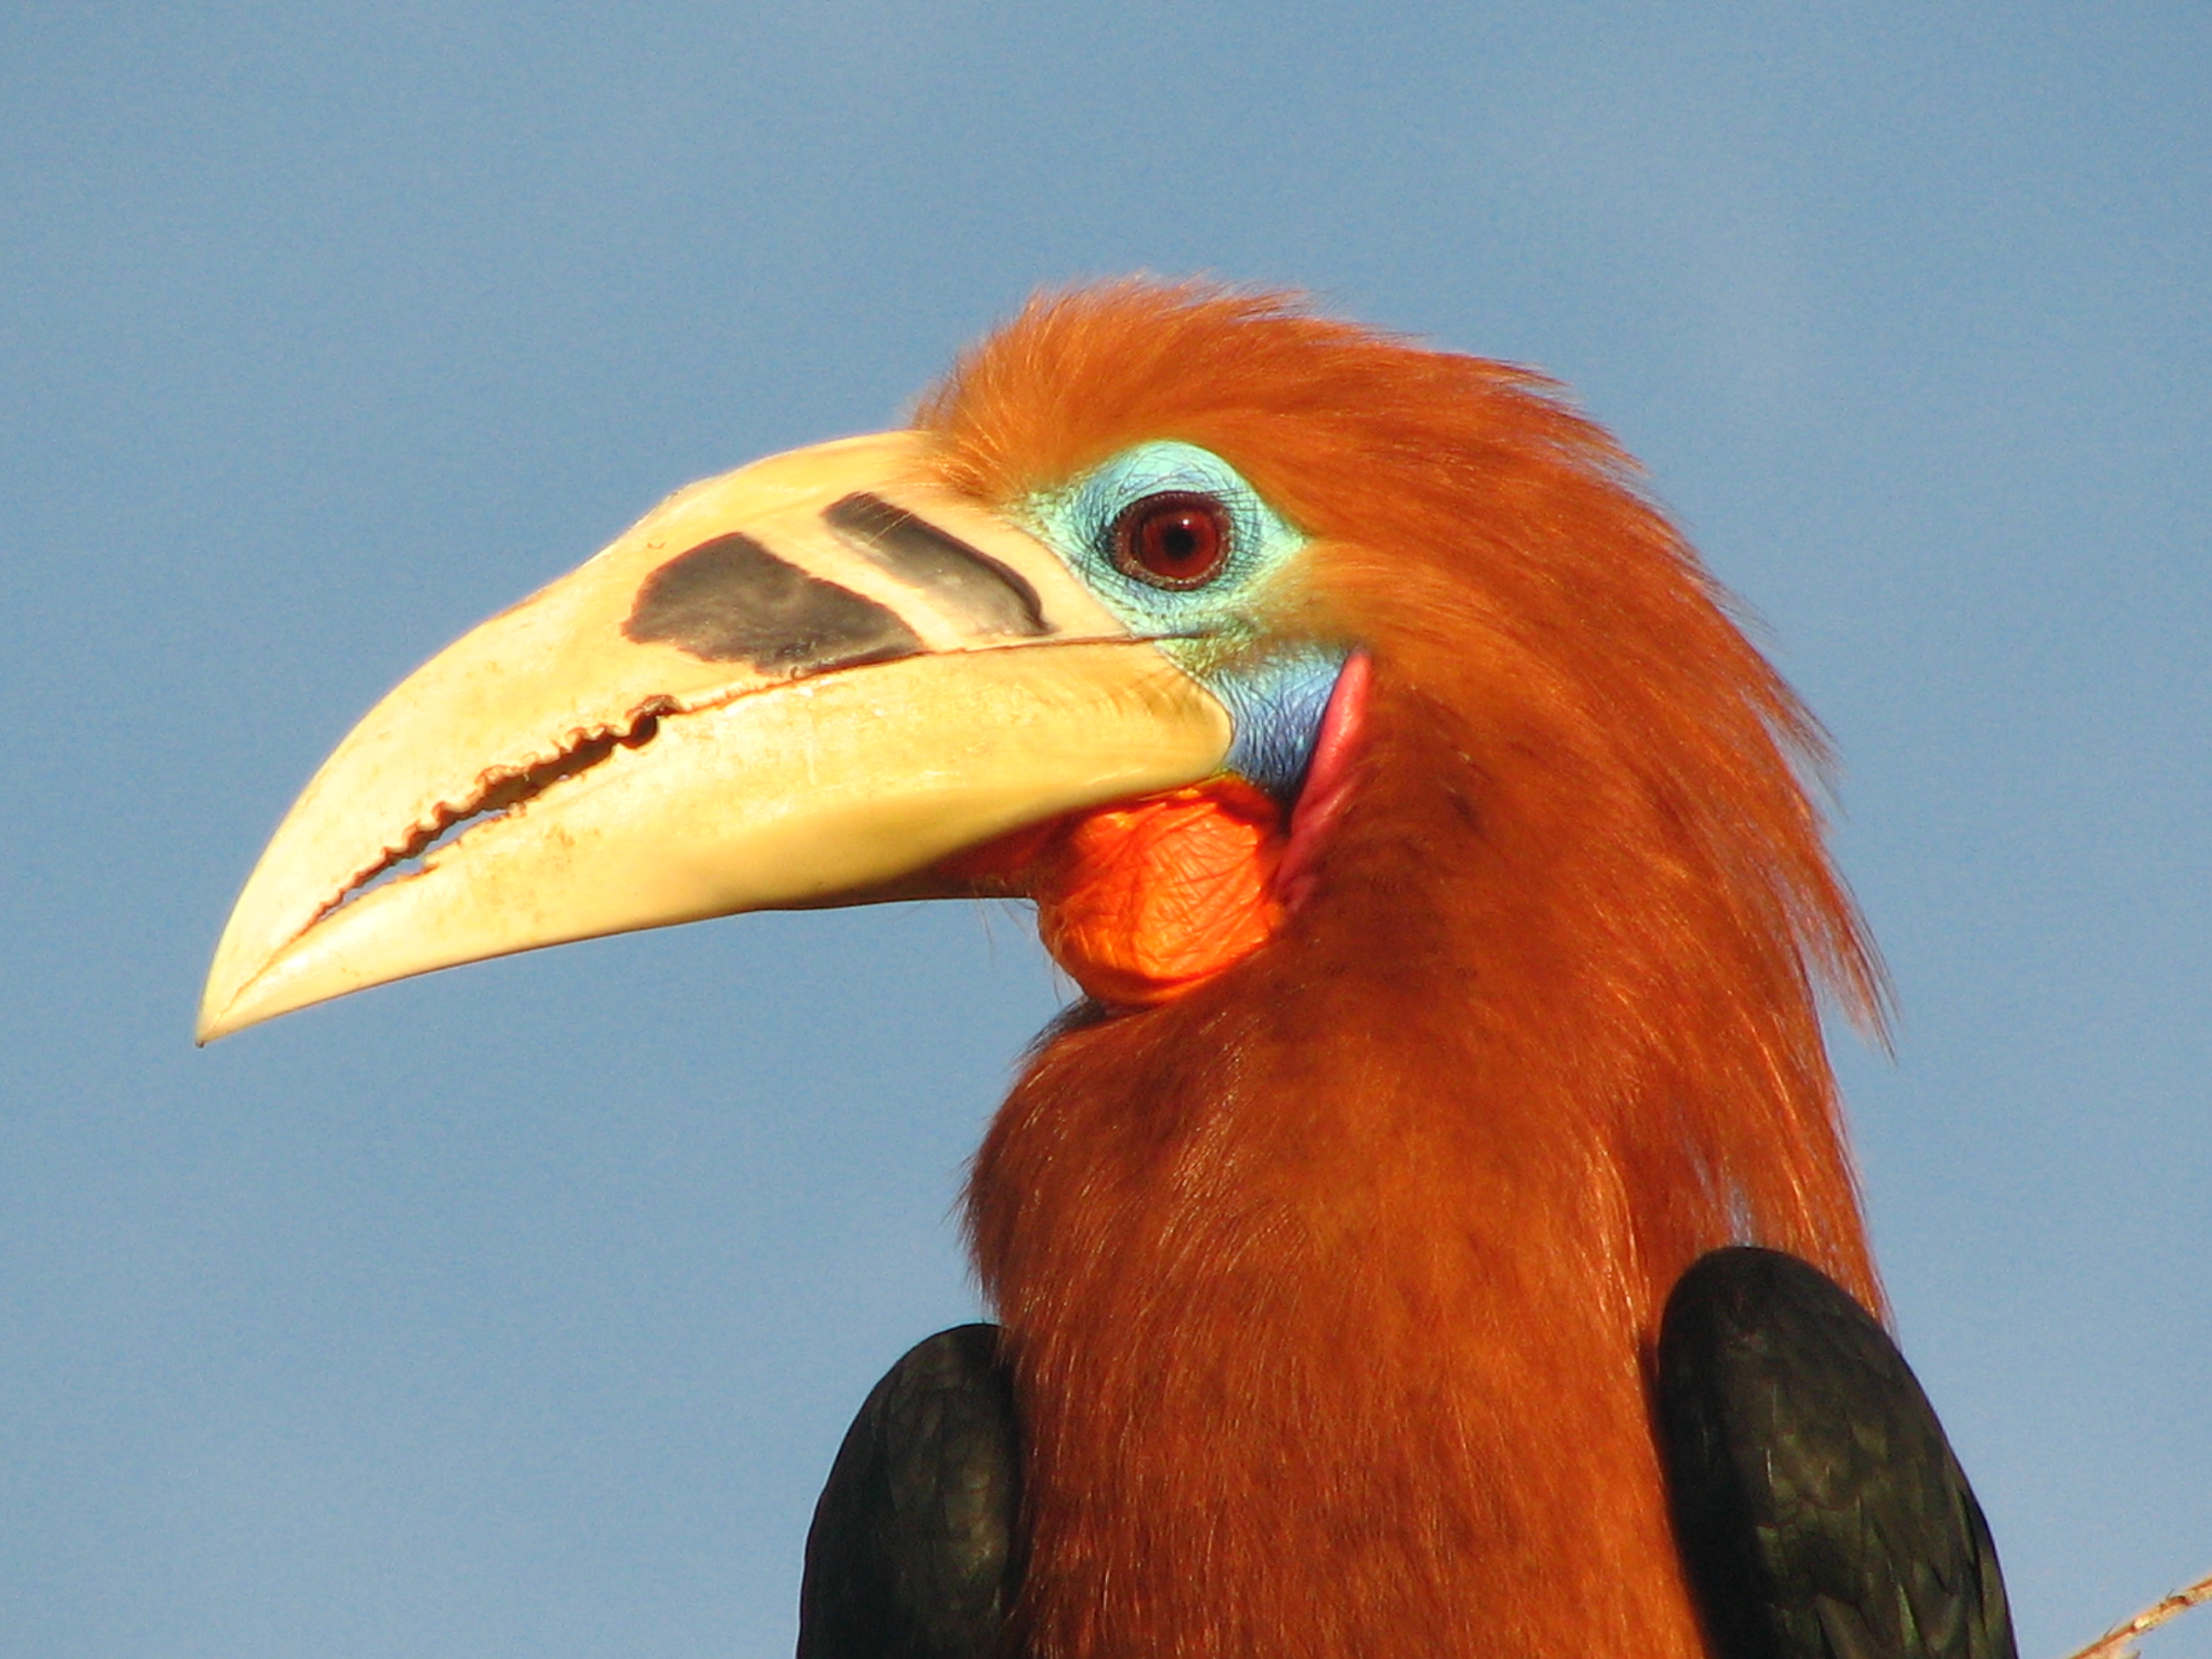 Rufous-necked hornbill 1